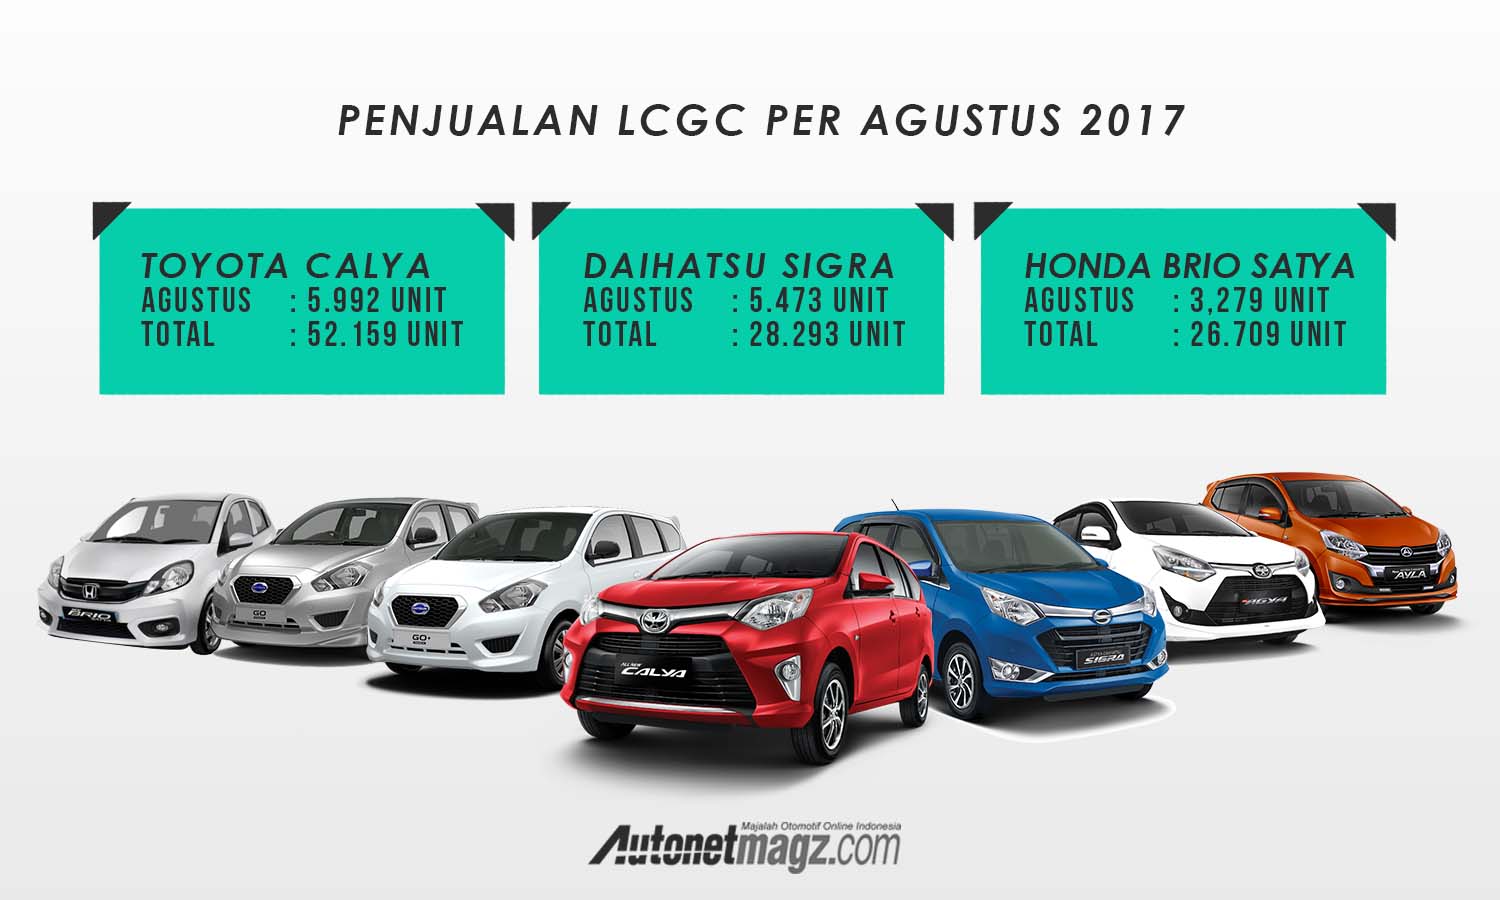 Berita, Penjualan LCGC Agustus 2017 – 1: Dinamika LCGC 2017 : Calya Merajai, Karimun Posisi Terakhir